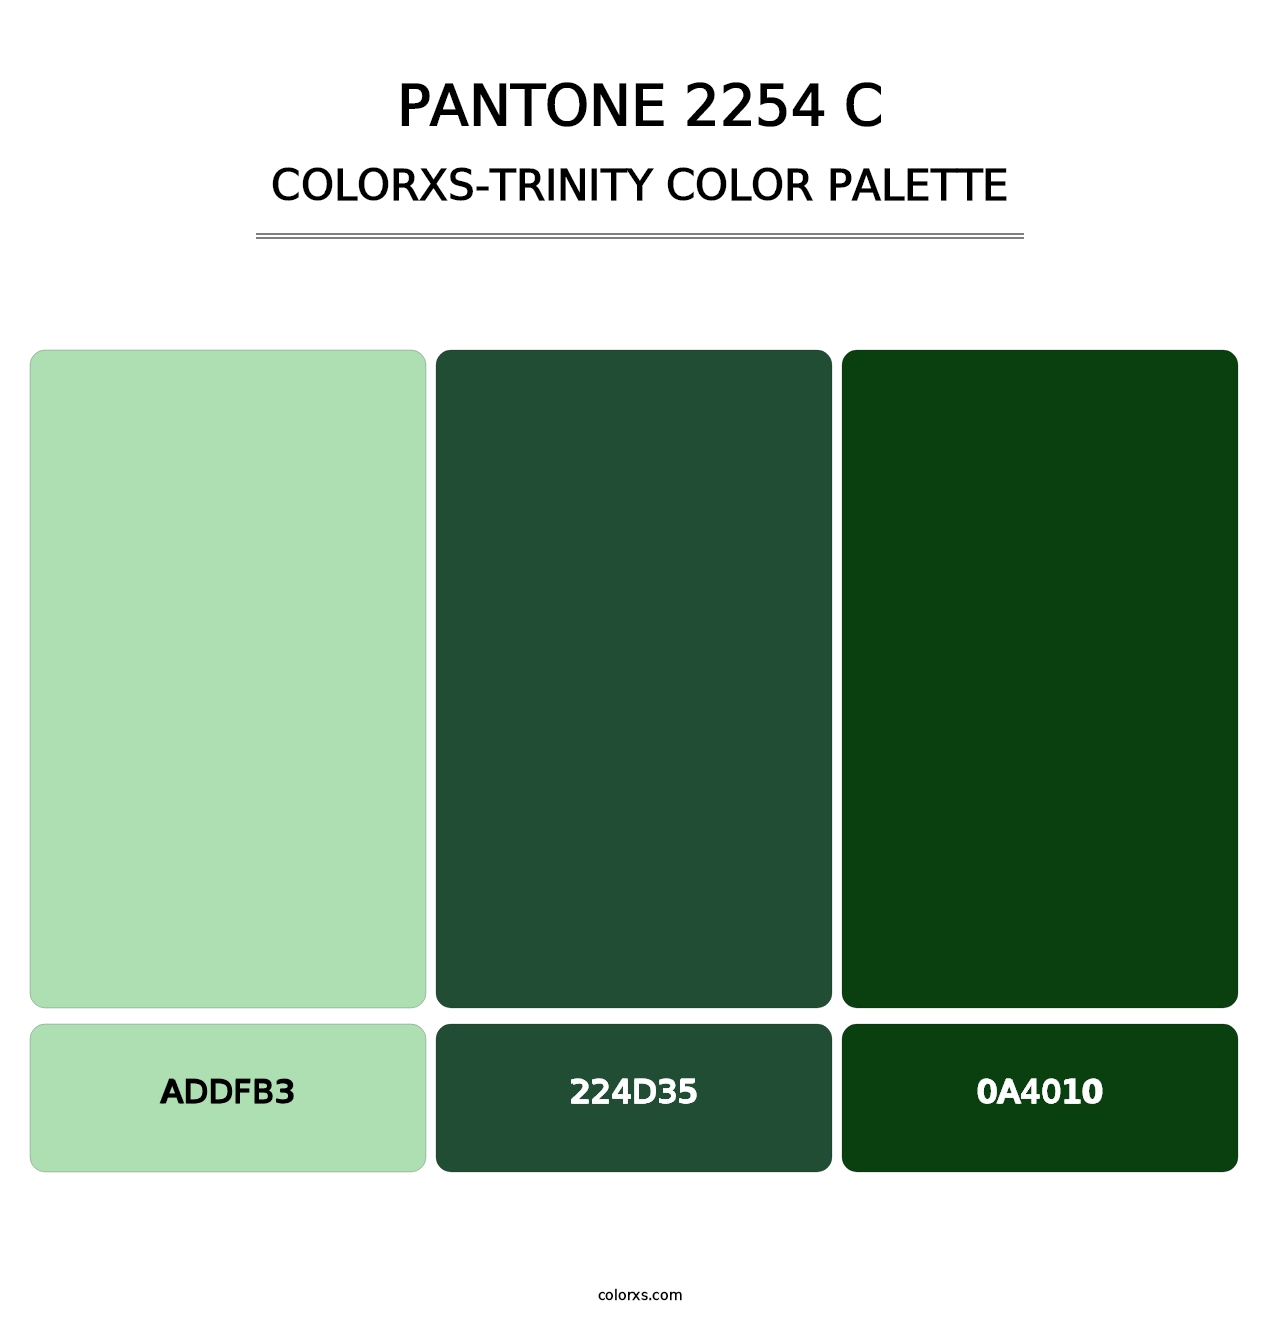 PANTONE 2254 C - Colorxs Trinity Palette